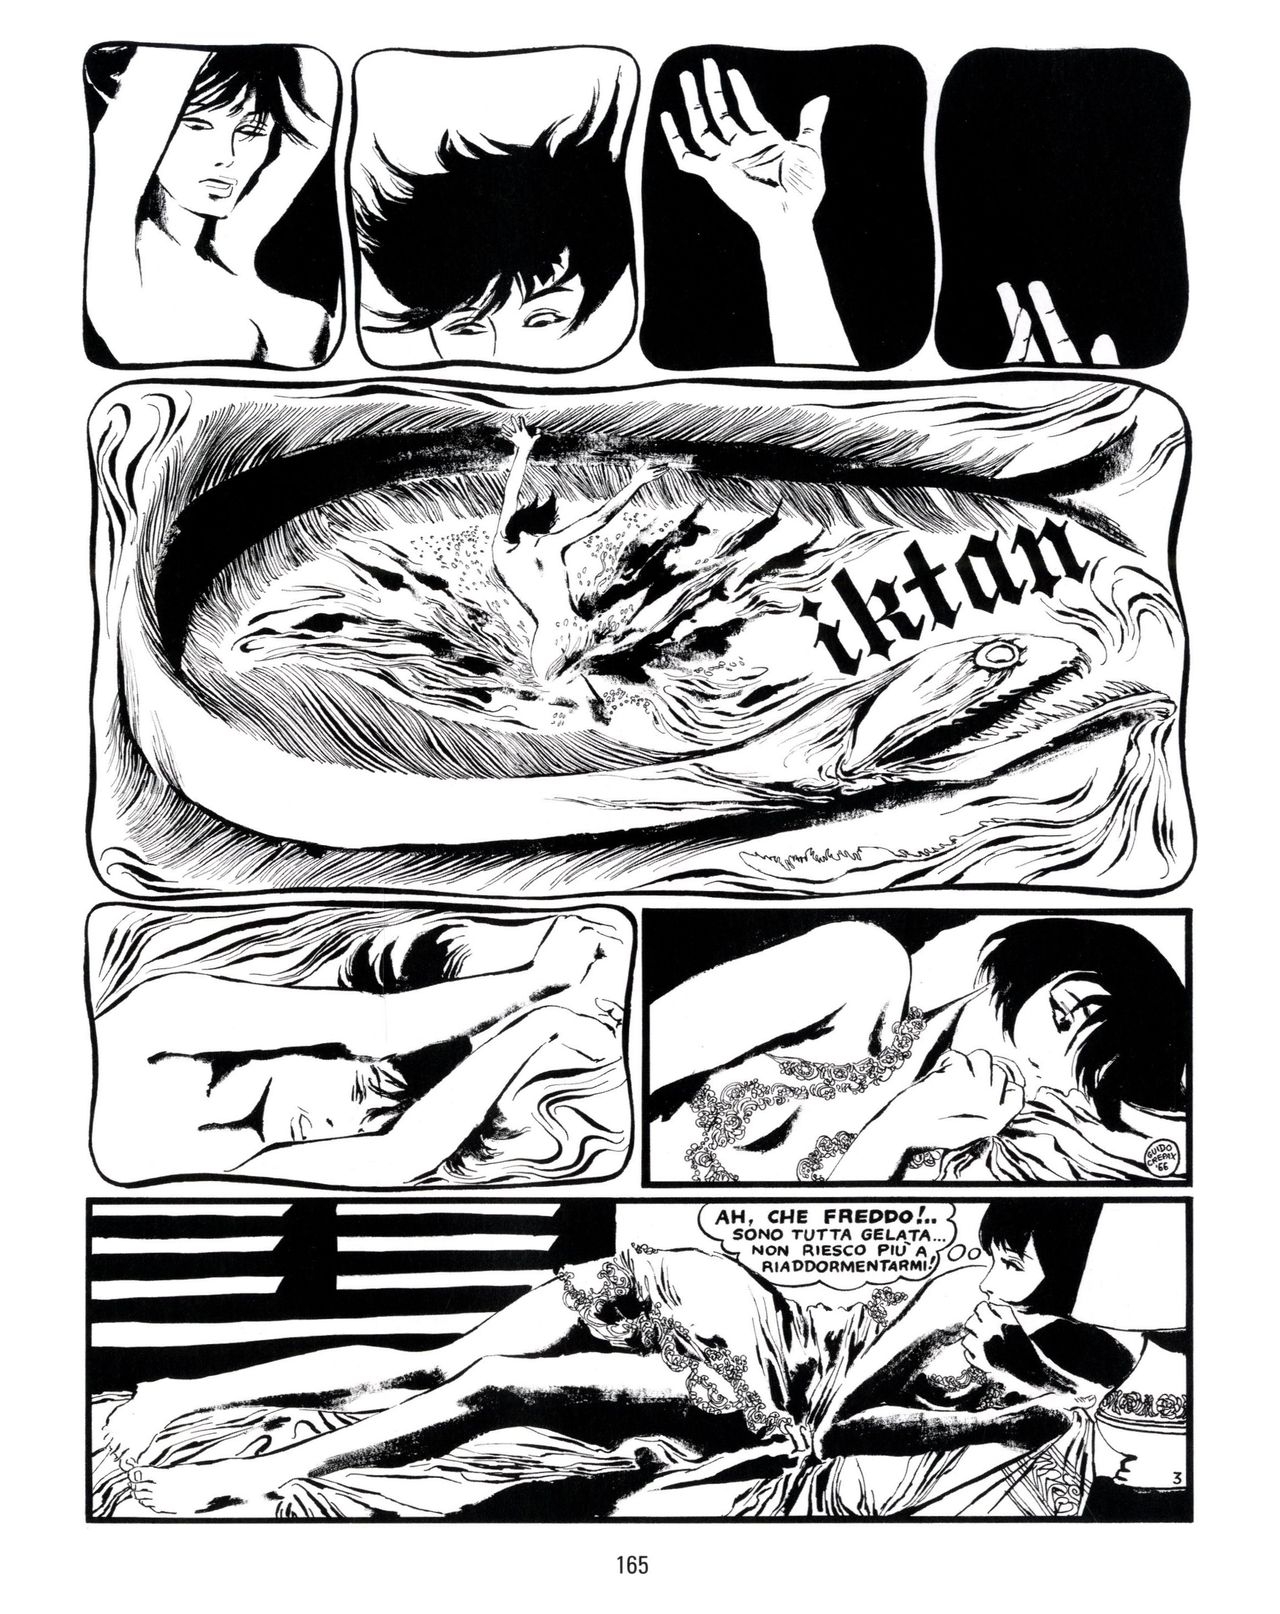 [Guido Crepax] Erotica Fumetti #25 : L'ascesa dei sotterranei : I cavalieri ciechi [Italian] 166